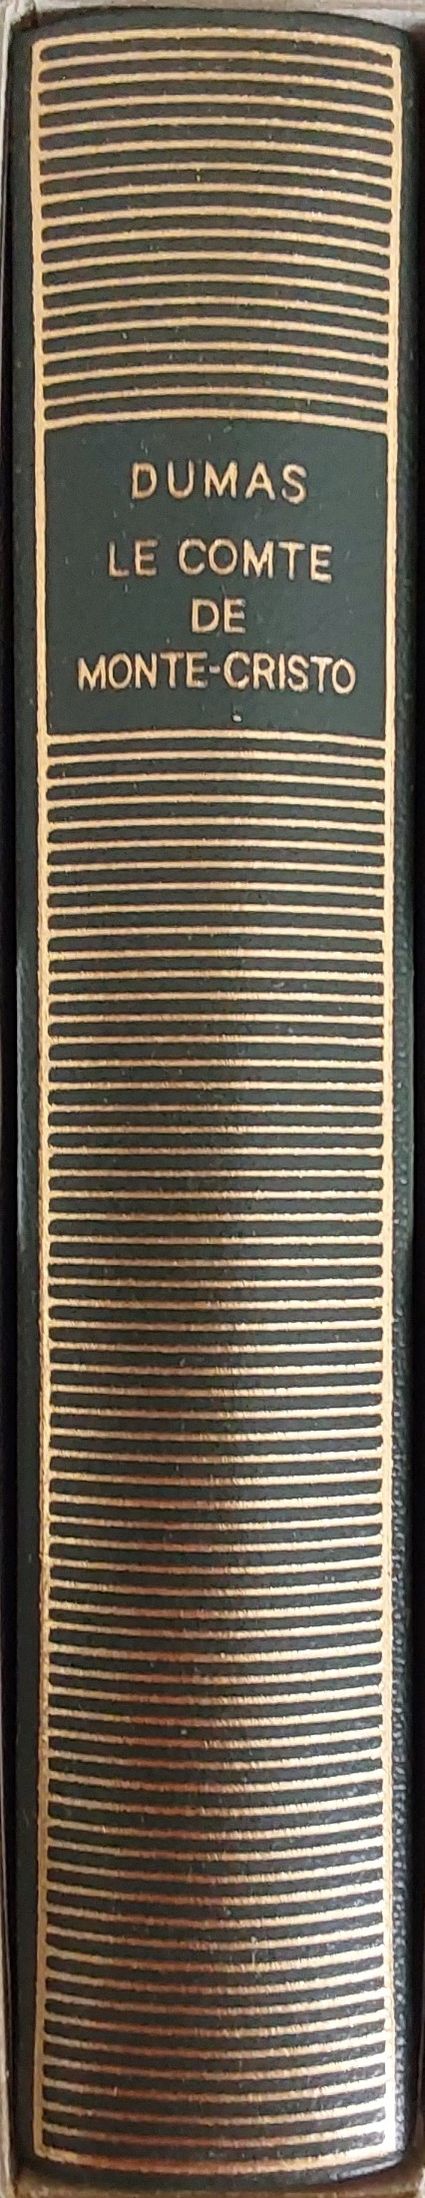 Volume 290 d'Alexandre Dumas dans la Bibliothèque de la Pléiade.